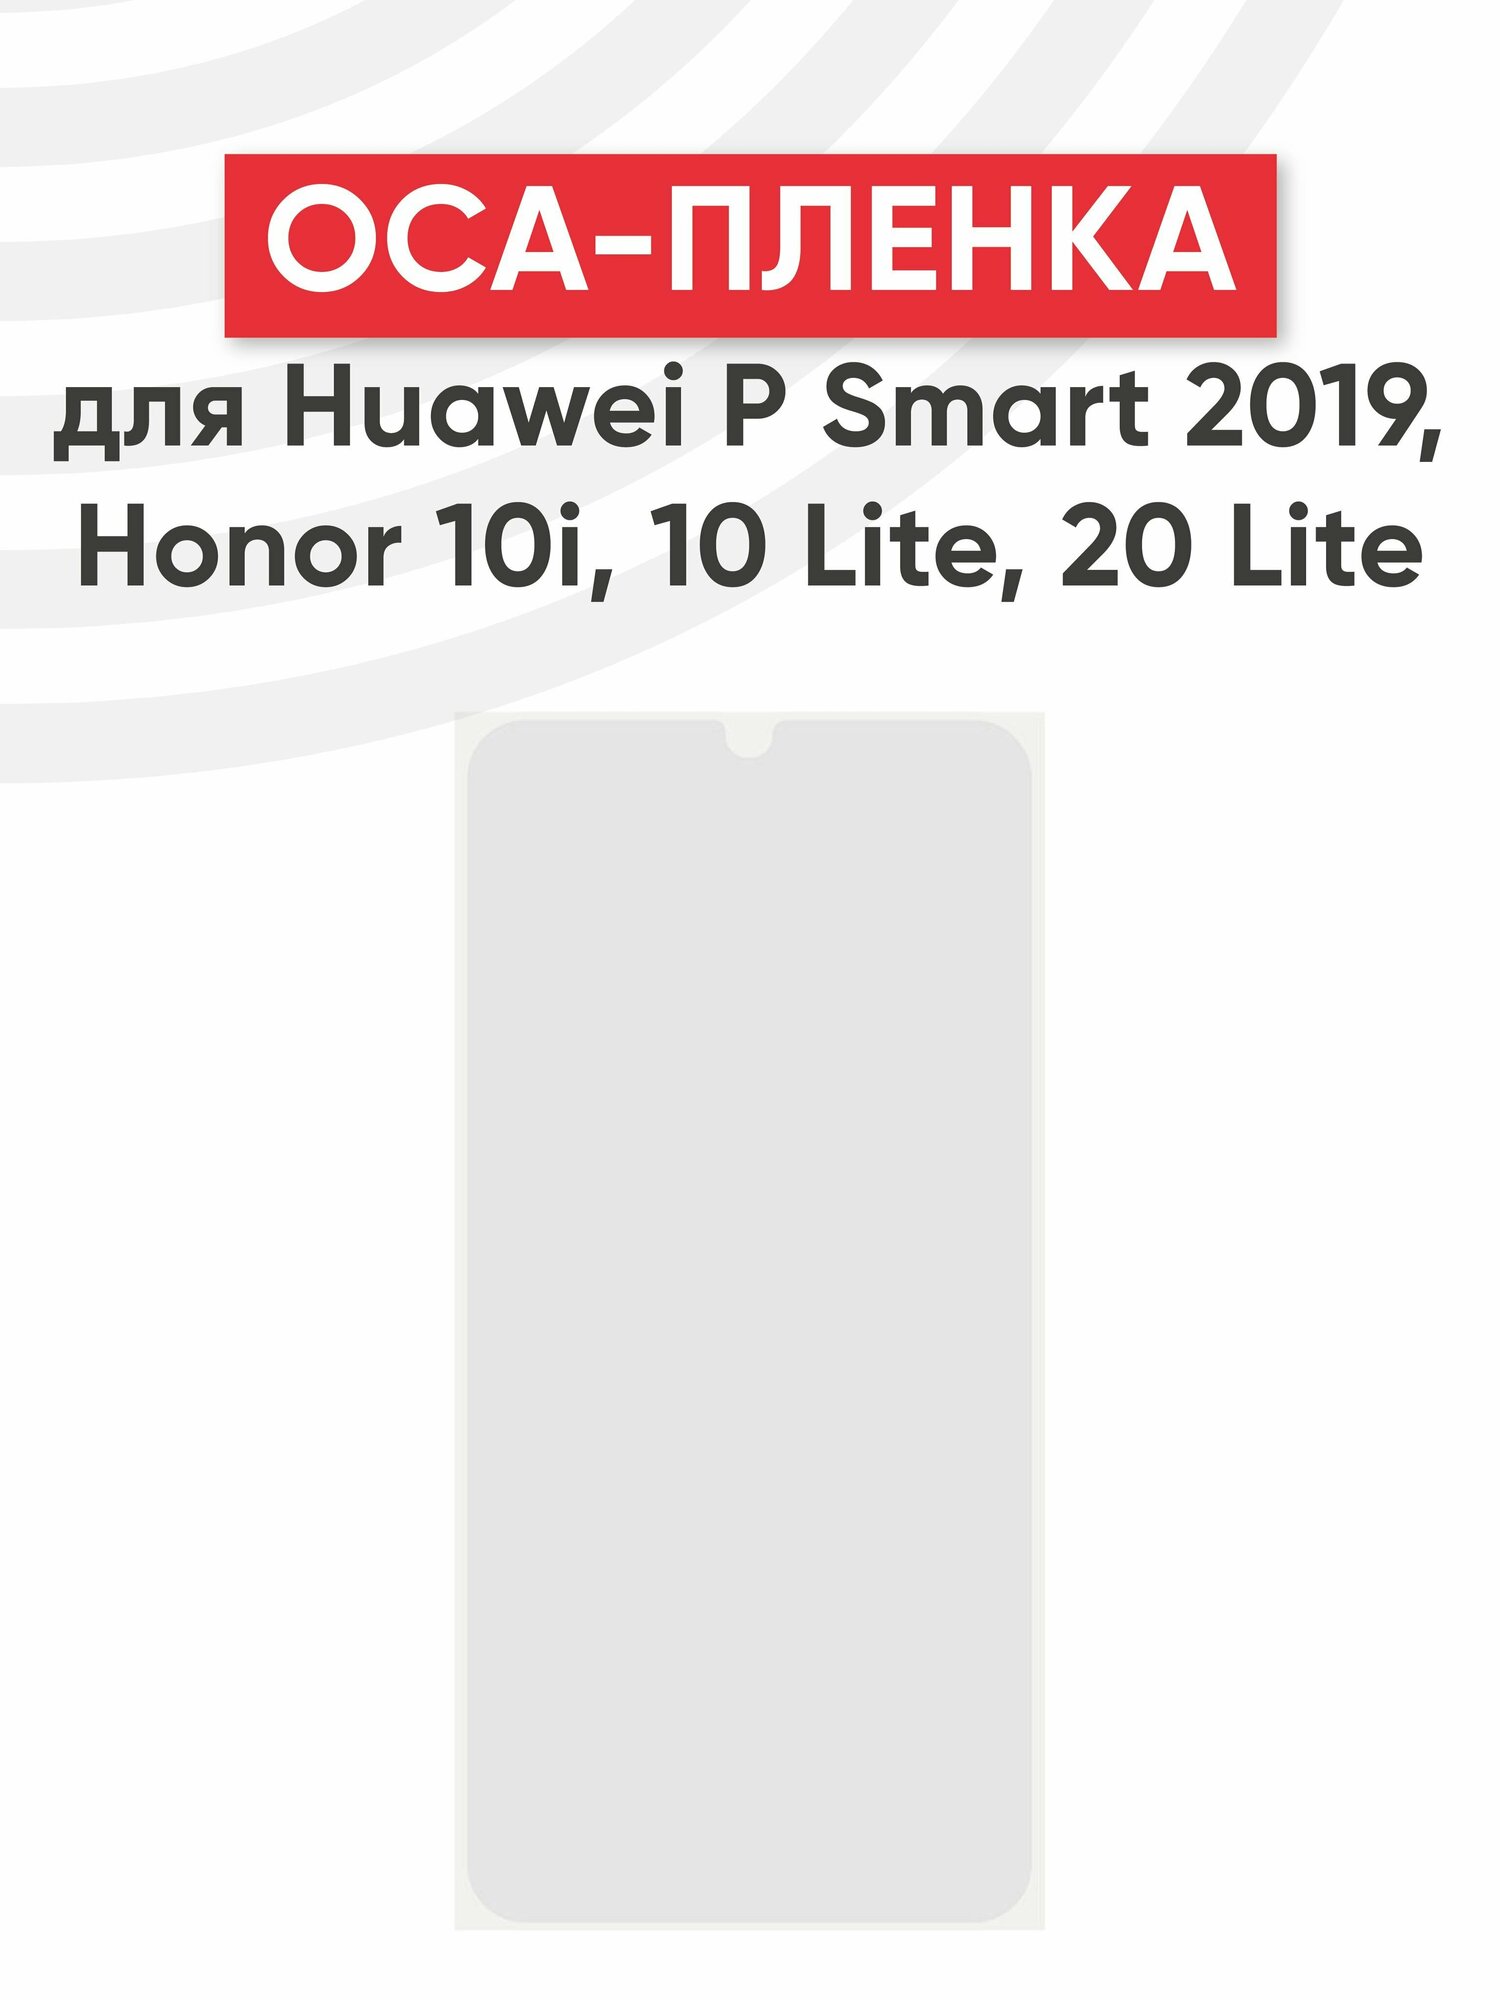 OCA пленка (клей) RageX для P Smart 2019 10i 10 Lite 20 Lite